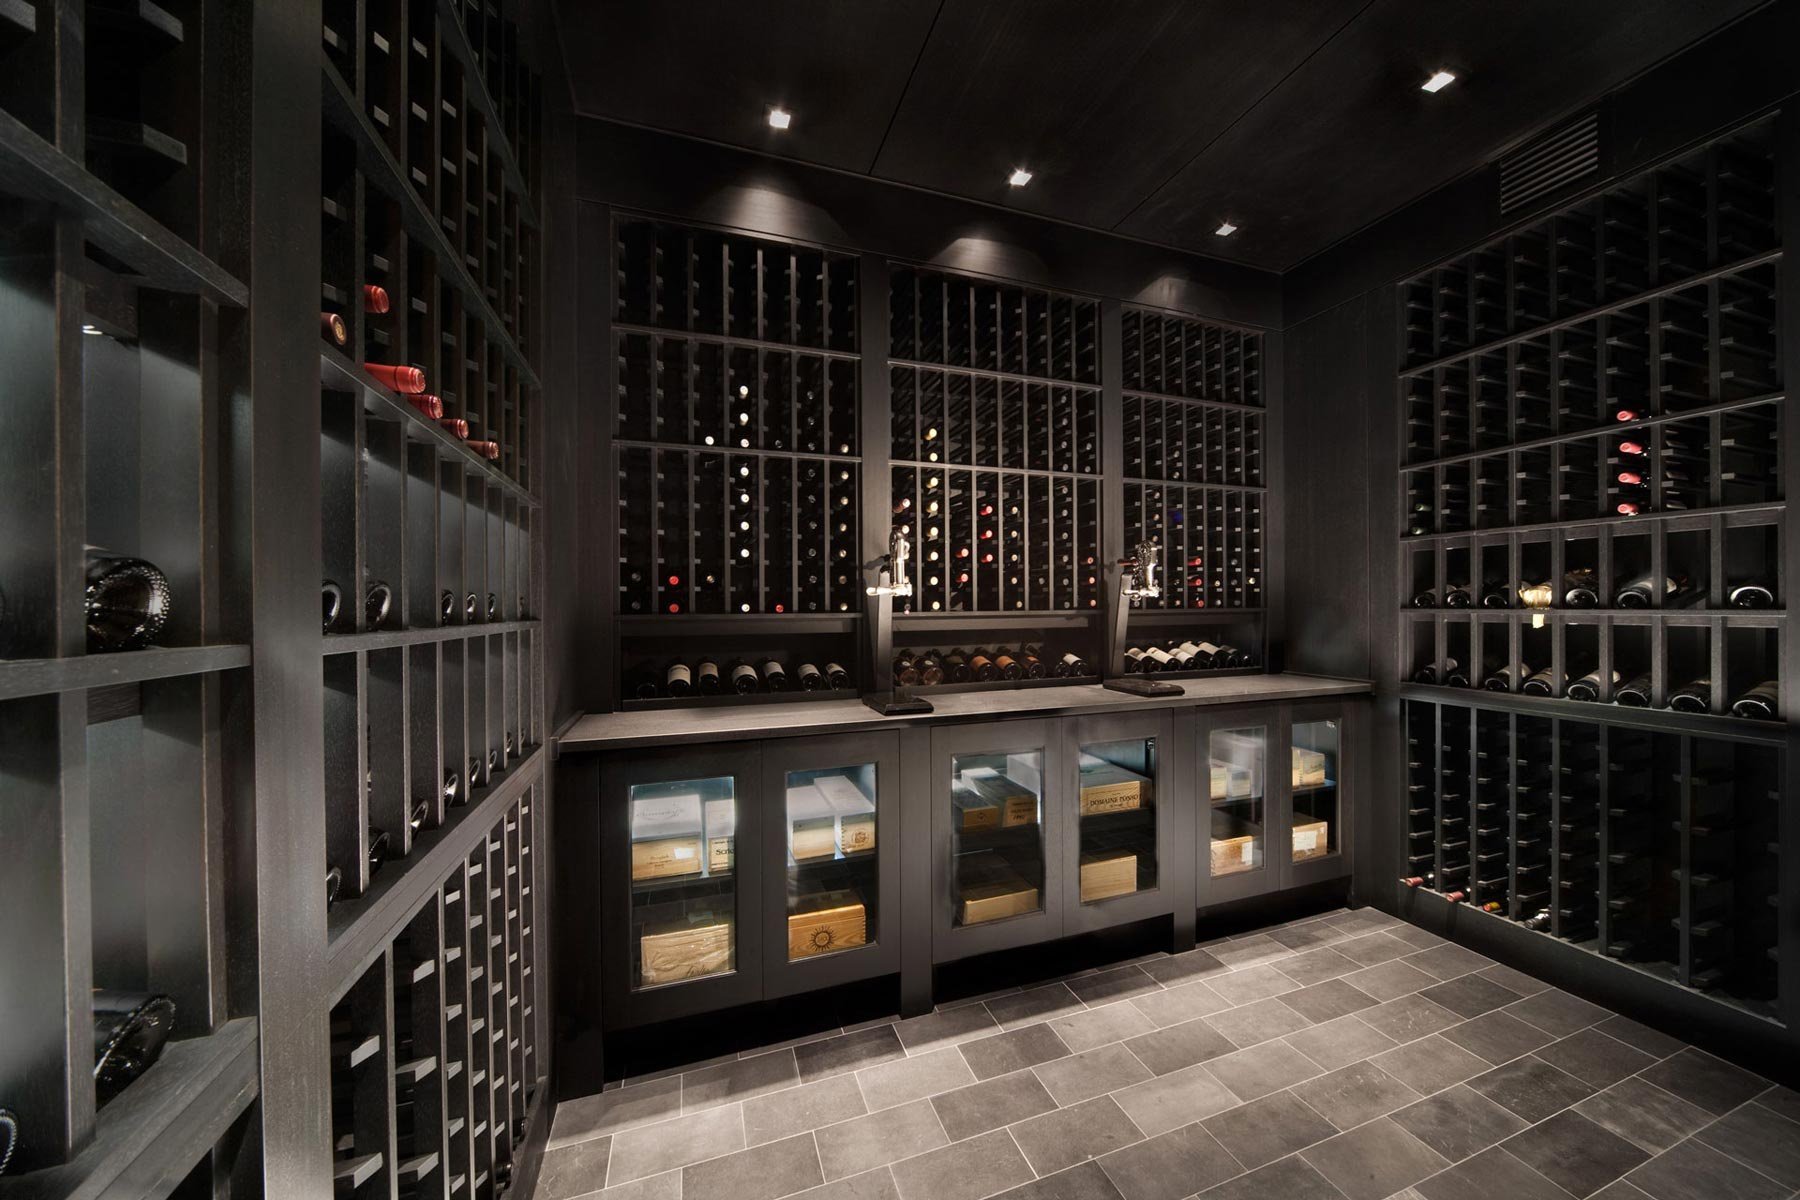 Sommelier collection. "Wine Room" винный бутик. Винный погреб Отырба. Modern Wine Cellar. Винный шкаф MC Wine w20s.